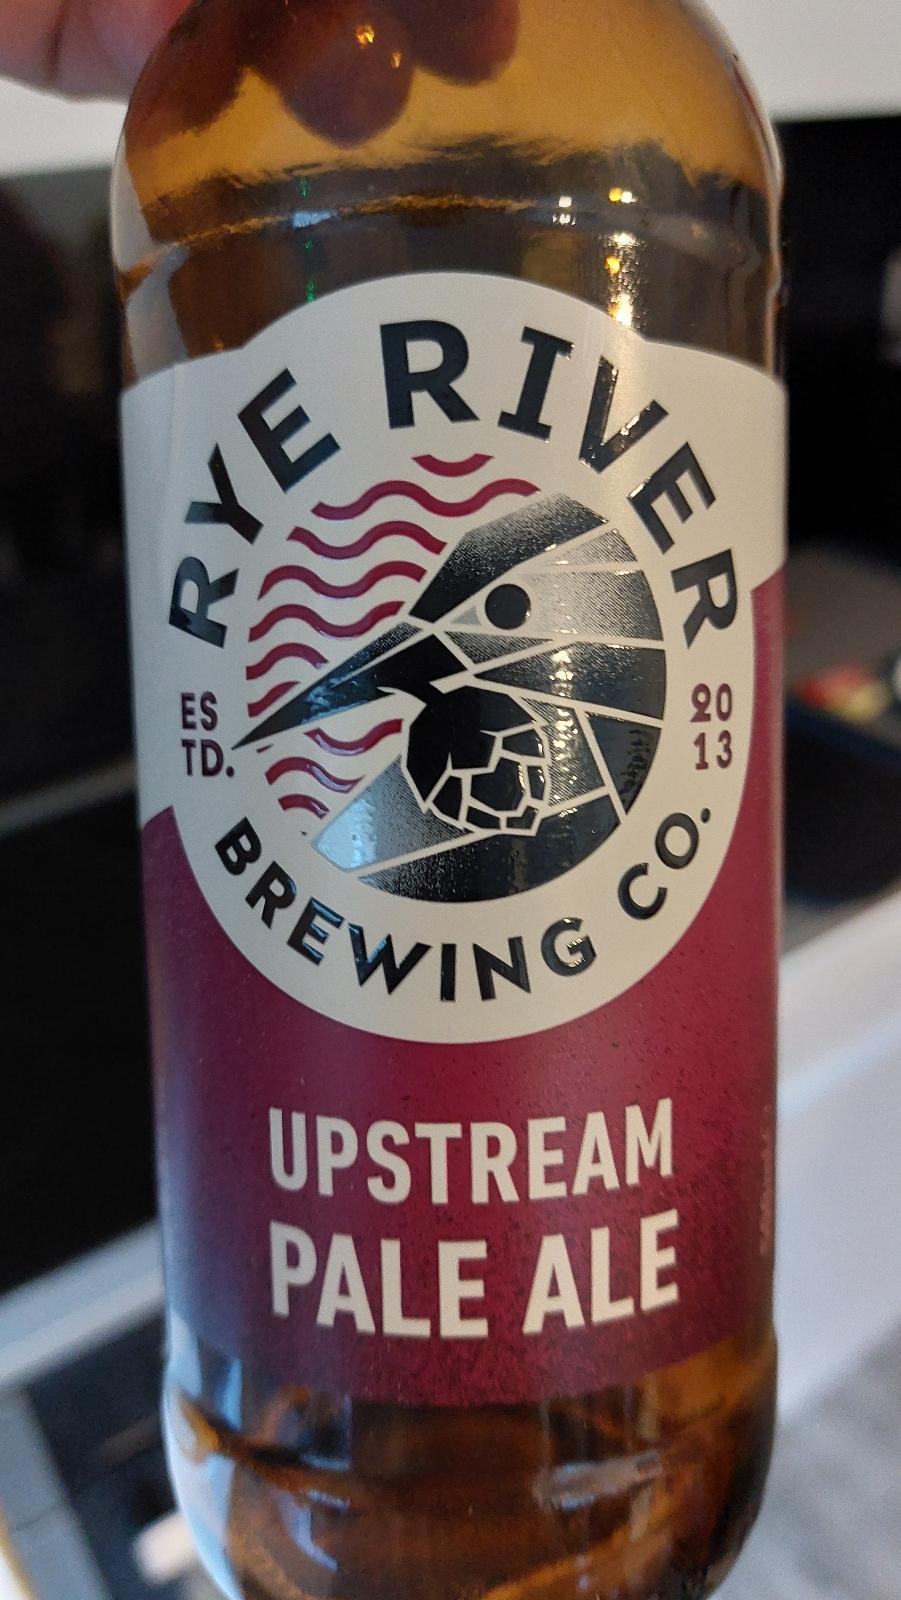 Upstream Pale Ale